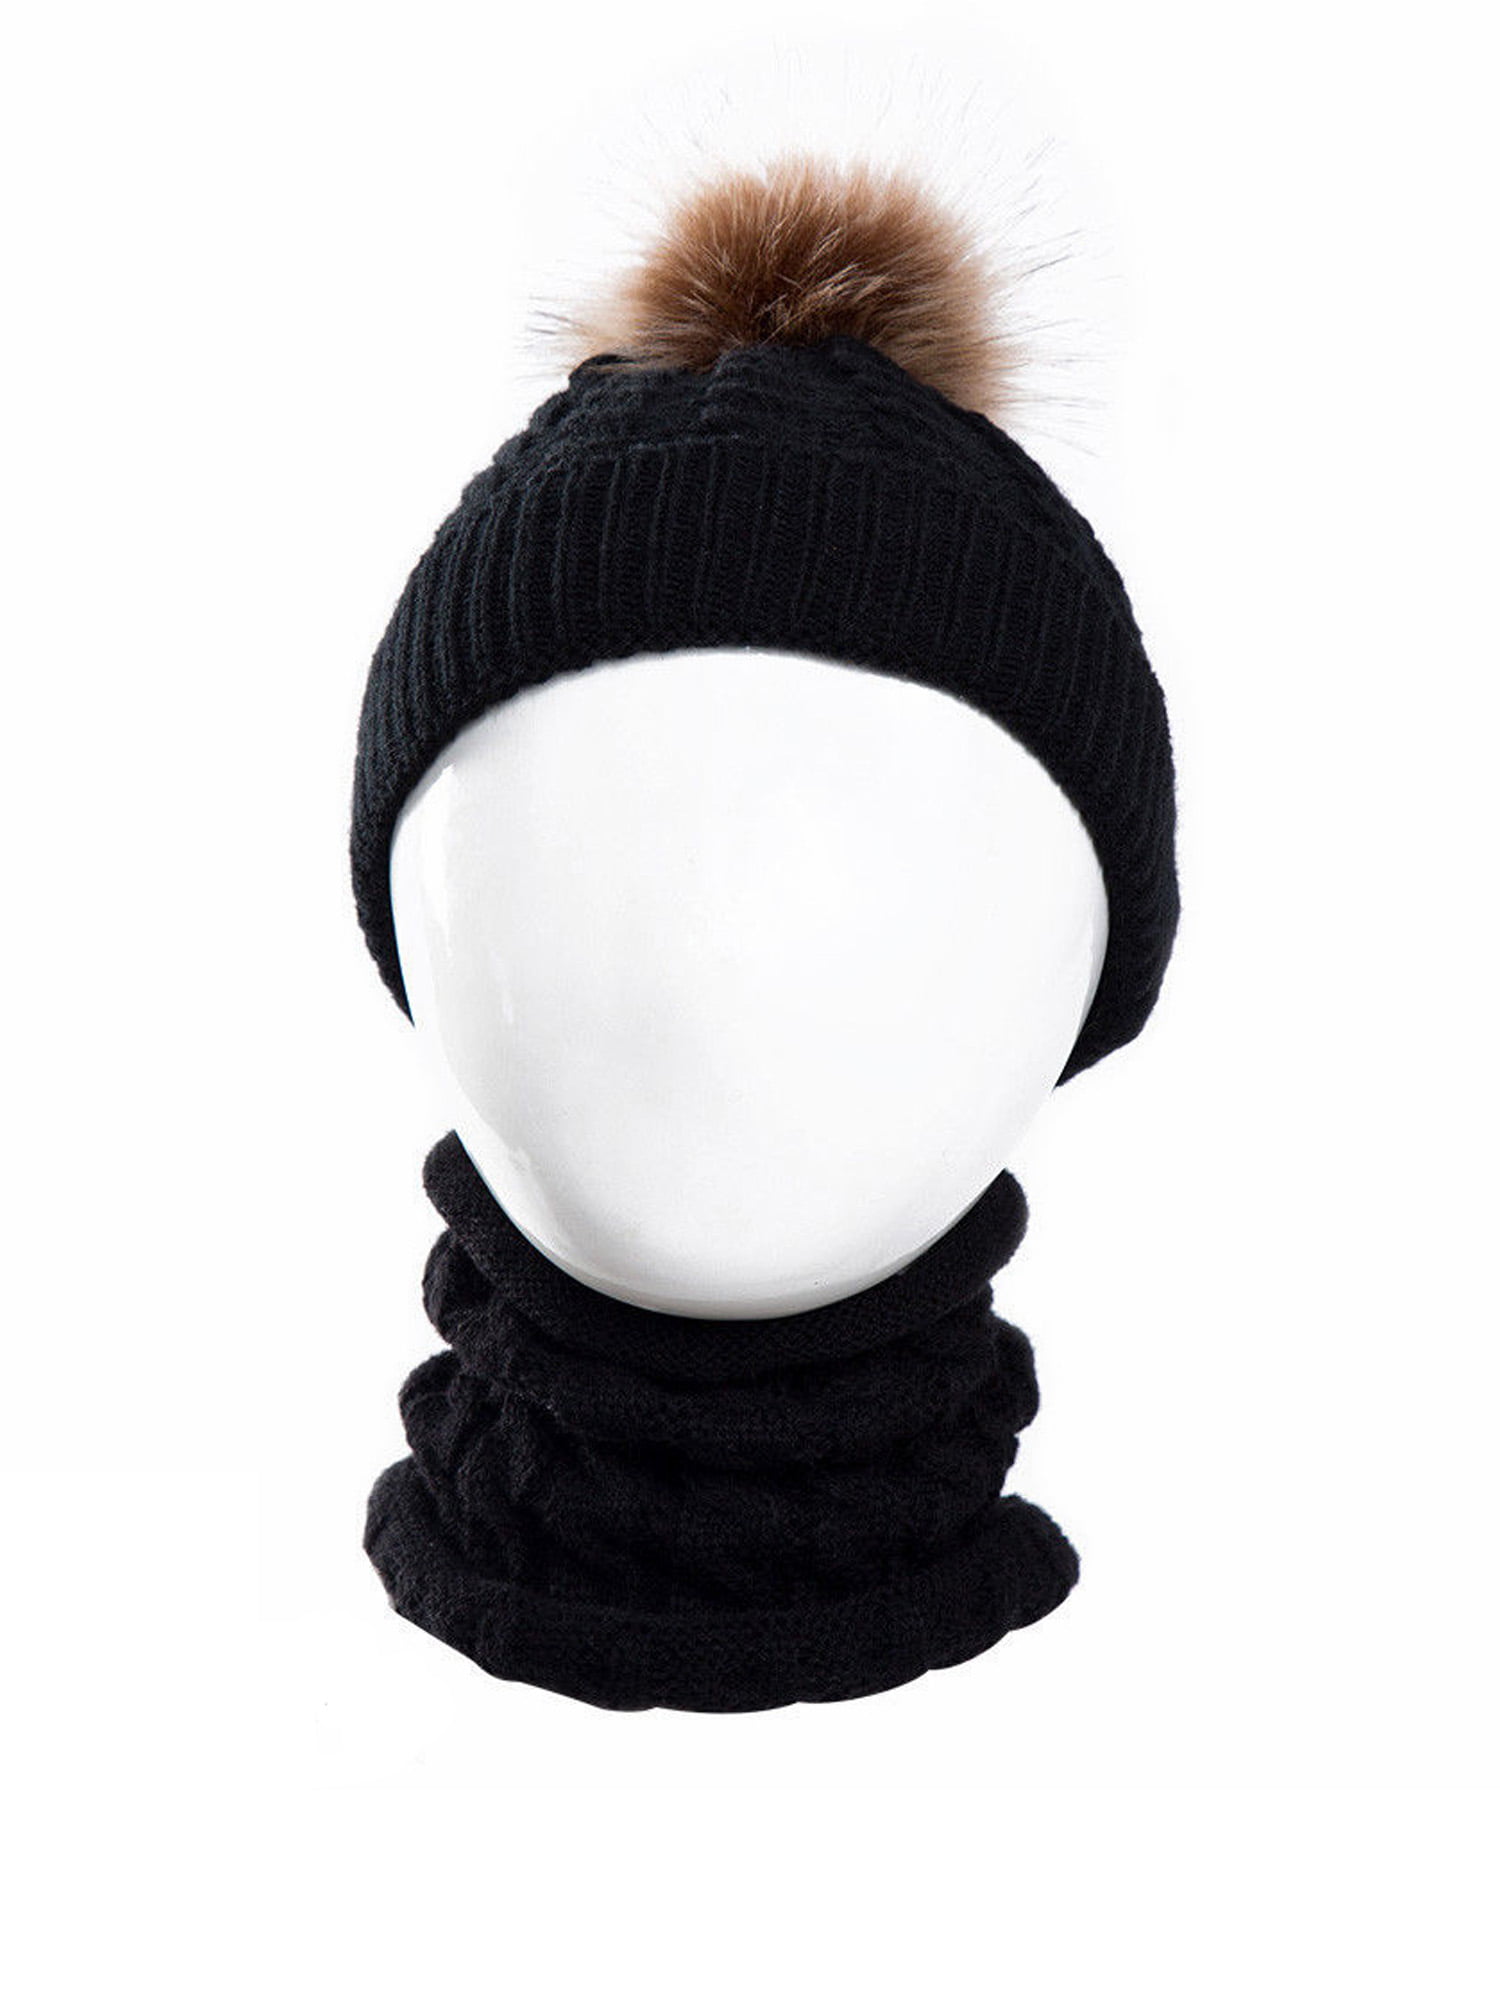 Details about   Toddler Kids Winter Ski Cap Baby Boy Girl Warm Knit Beanie Hat Circle Scarf Caps 